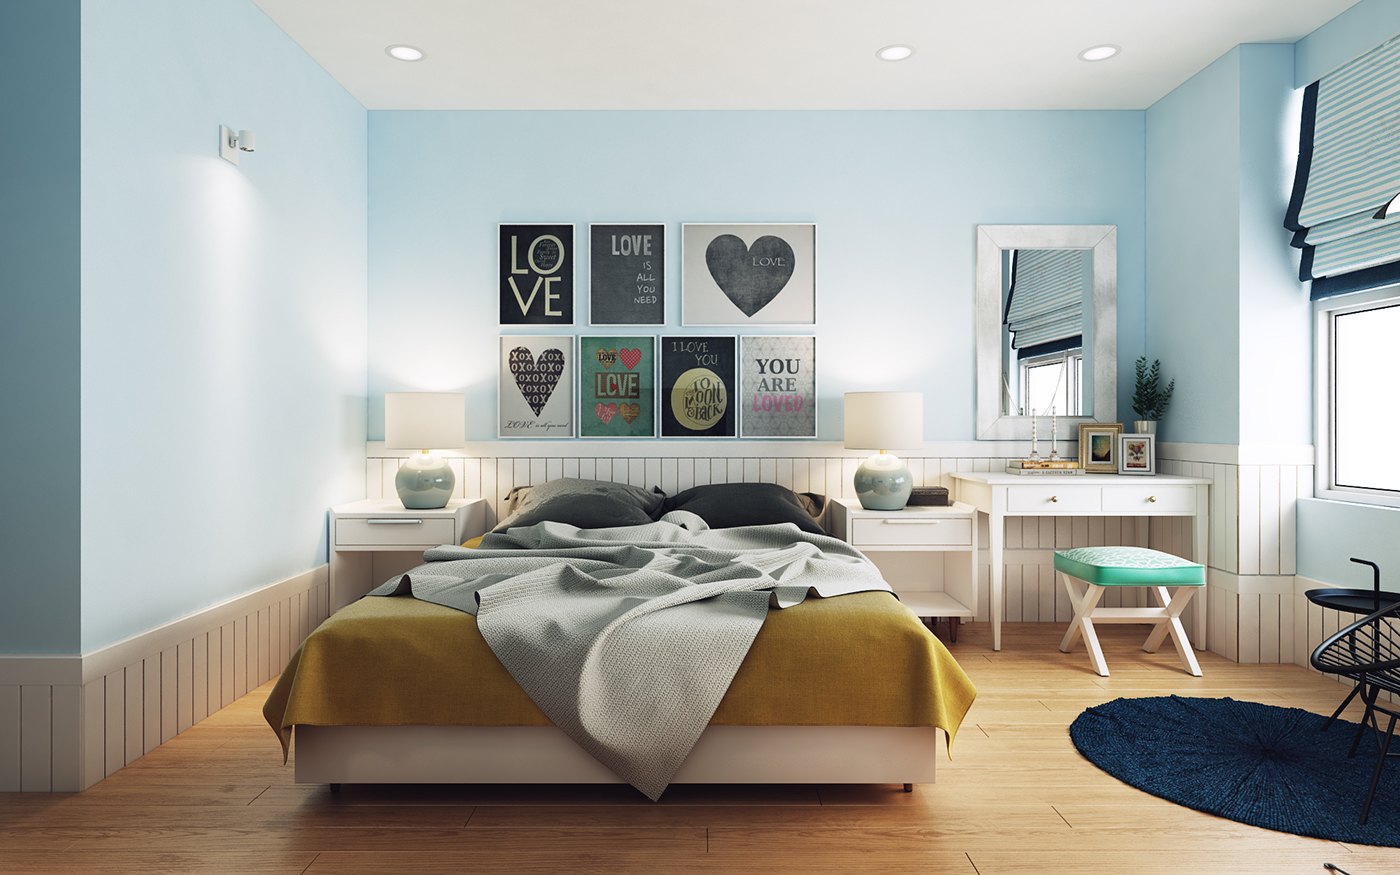 Love-themed Nordic bedroom "width =" 1400 "height =" 875 "srcset =" https://mileray.com/wp-content/uploads/2017/04/love-themed-nordic-bedroom-Koj-Design .jpg 1400w, https://mileray.com/wp-content/uploads/2017/04/love-themed-nordic-bedroom-Koj-Design-300x188.jpg 300w, https://mileray.com/wp-content /uploads/2017/04/love-themed-nordic-bedroom-Koj-Design-768x480.jpg 768w, https://mileray.com/wp-content/uploads/2017/04/love-themed-nordic-bedroom- Koj-Design-1024x640.jpg 1024w, https://mileray.com/wp-content/uploads/2017/04/love-themed-nordic-bedroom-Koj-Design-696x435.jpg 696w, https: // myfashionos. com / wp-content / uploads / 2017/04 / love-topic-nordic-bedroom-Koj-Design-1068x668.jpg 1068w, https://mileray.com/wp-content/uploads/2017/04/love-themed -nordic-bedroom-koj-design-672x420.jpg 672w "sizes =" (maximum width: 1400px) 100vw, 1400px